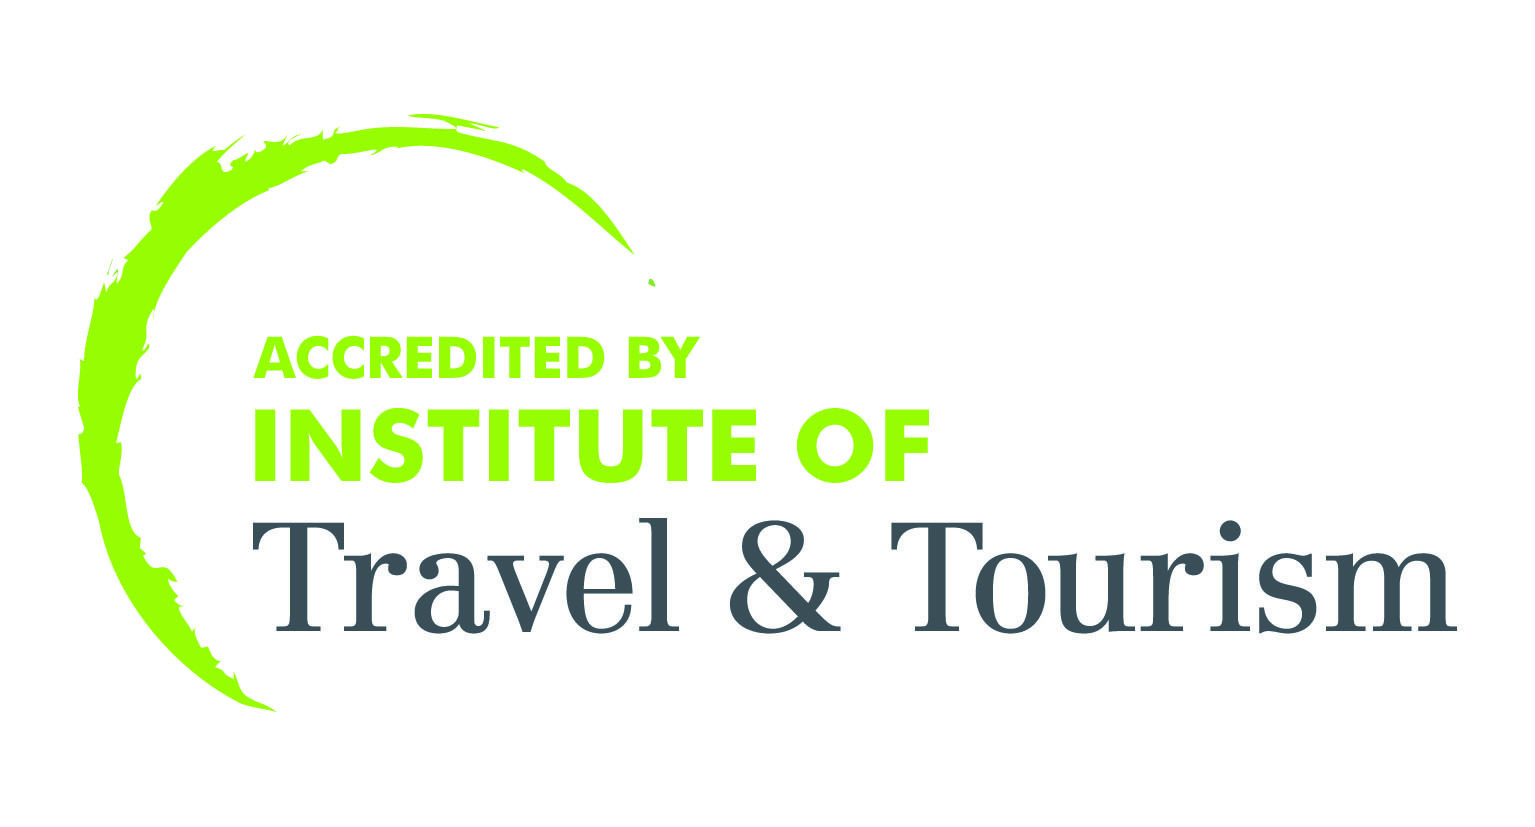 The Institute of Travel & Tourism.